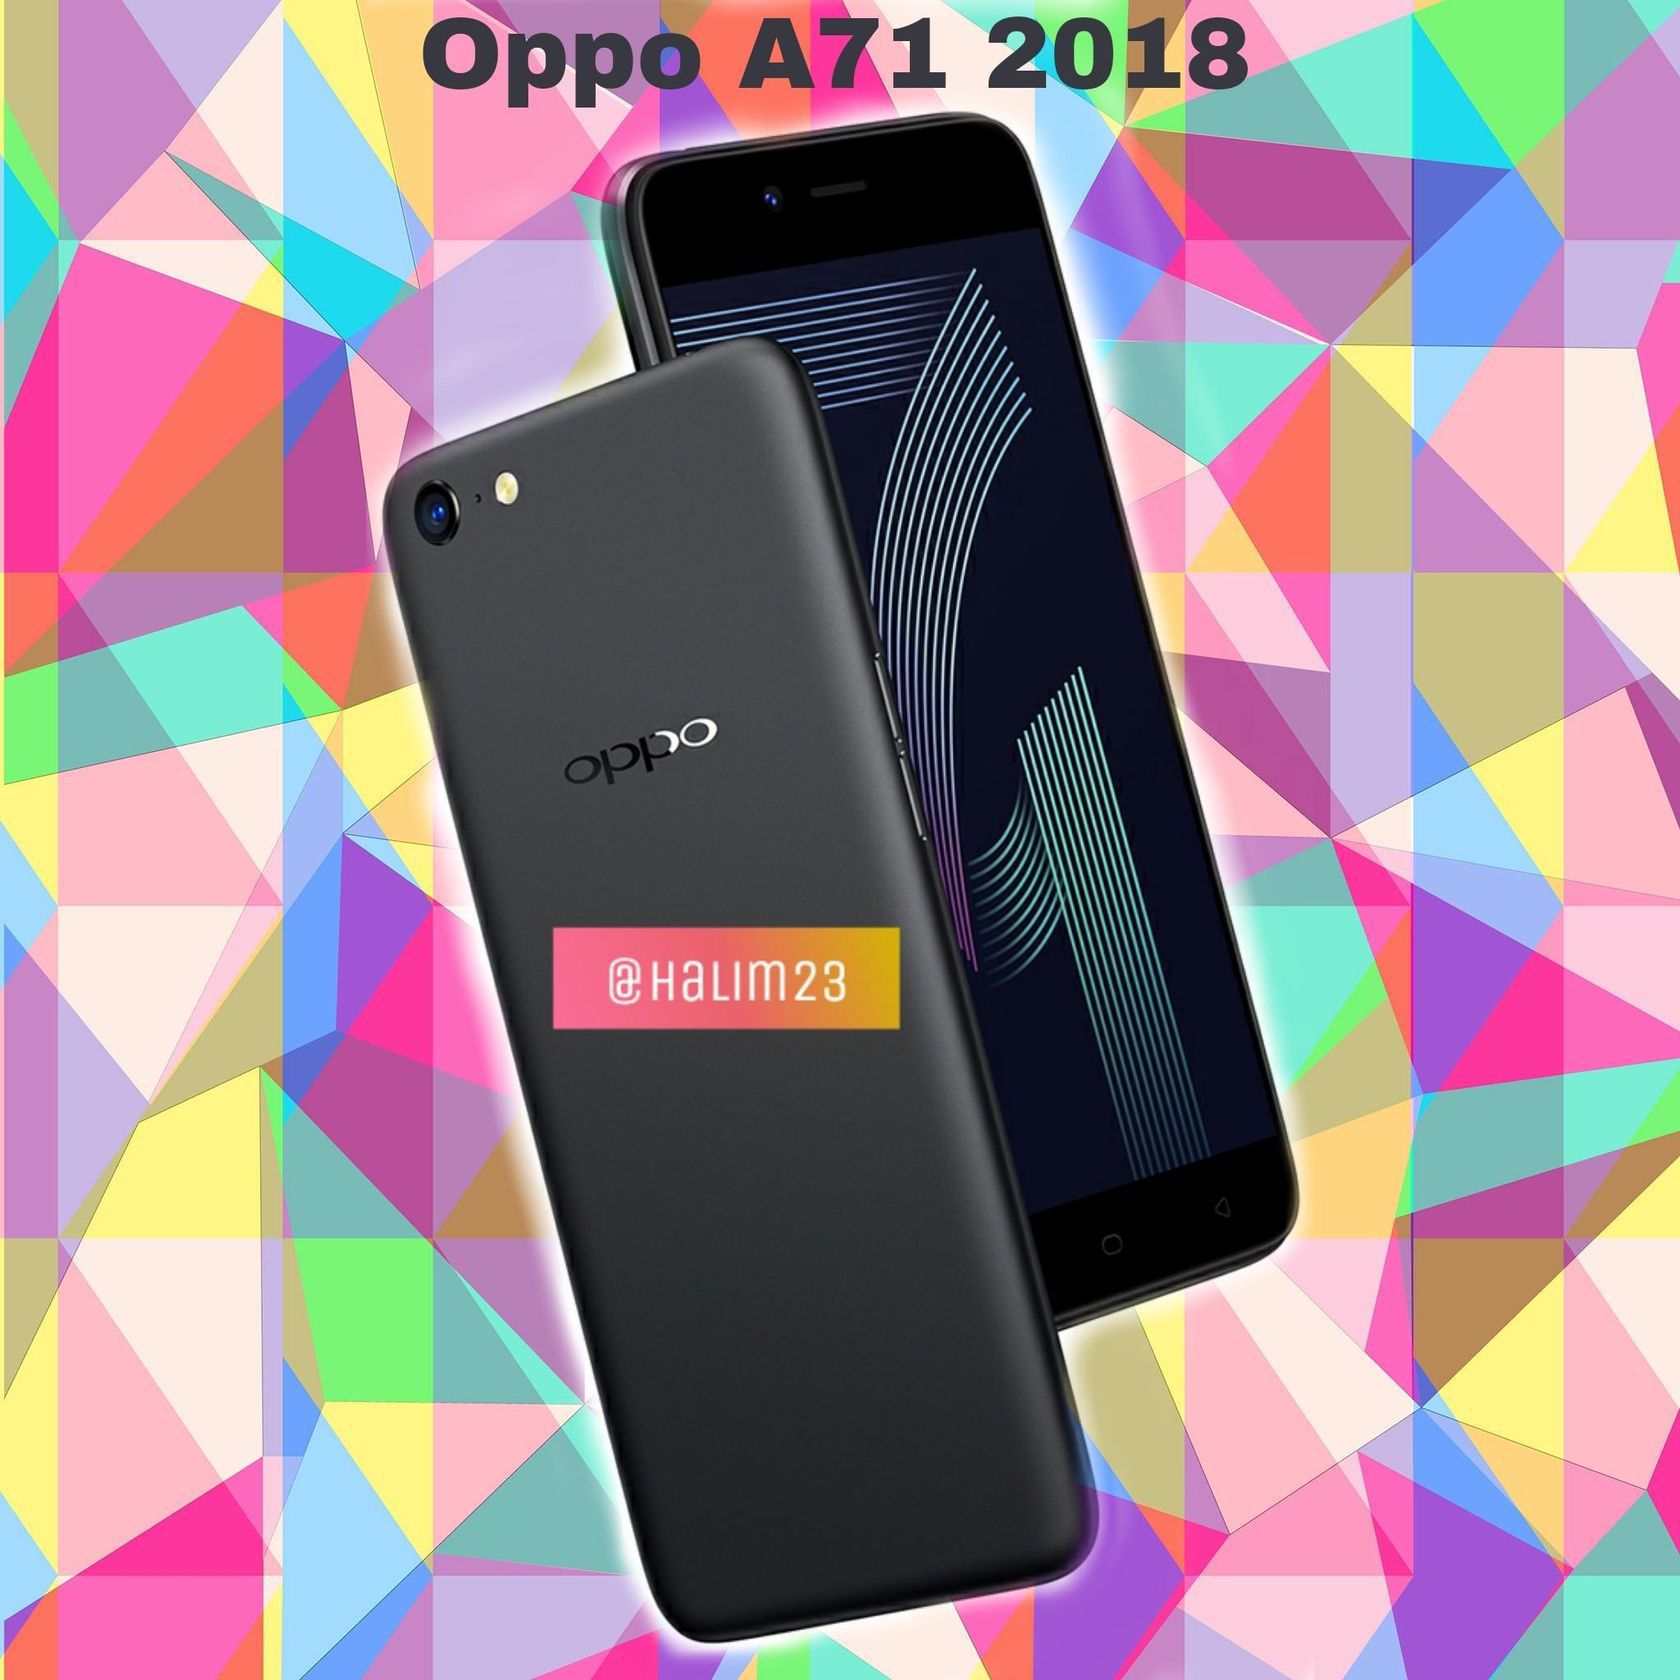 Oppo A71(2018 model) 3GB ( 16GB , 3 GB ) Black Mobile